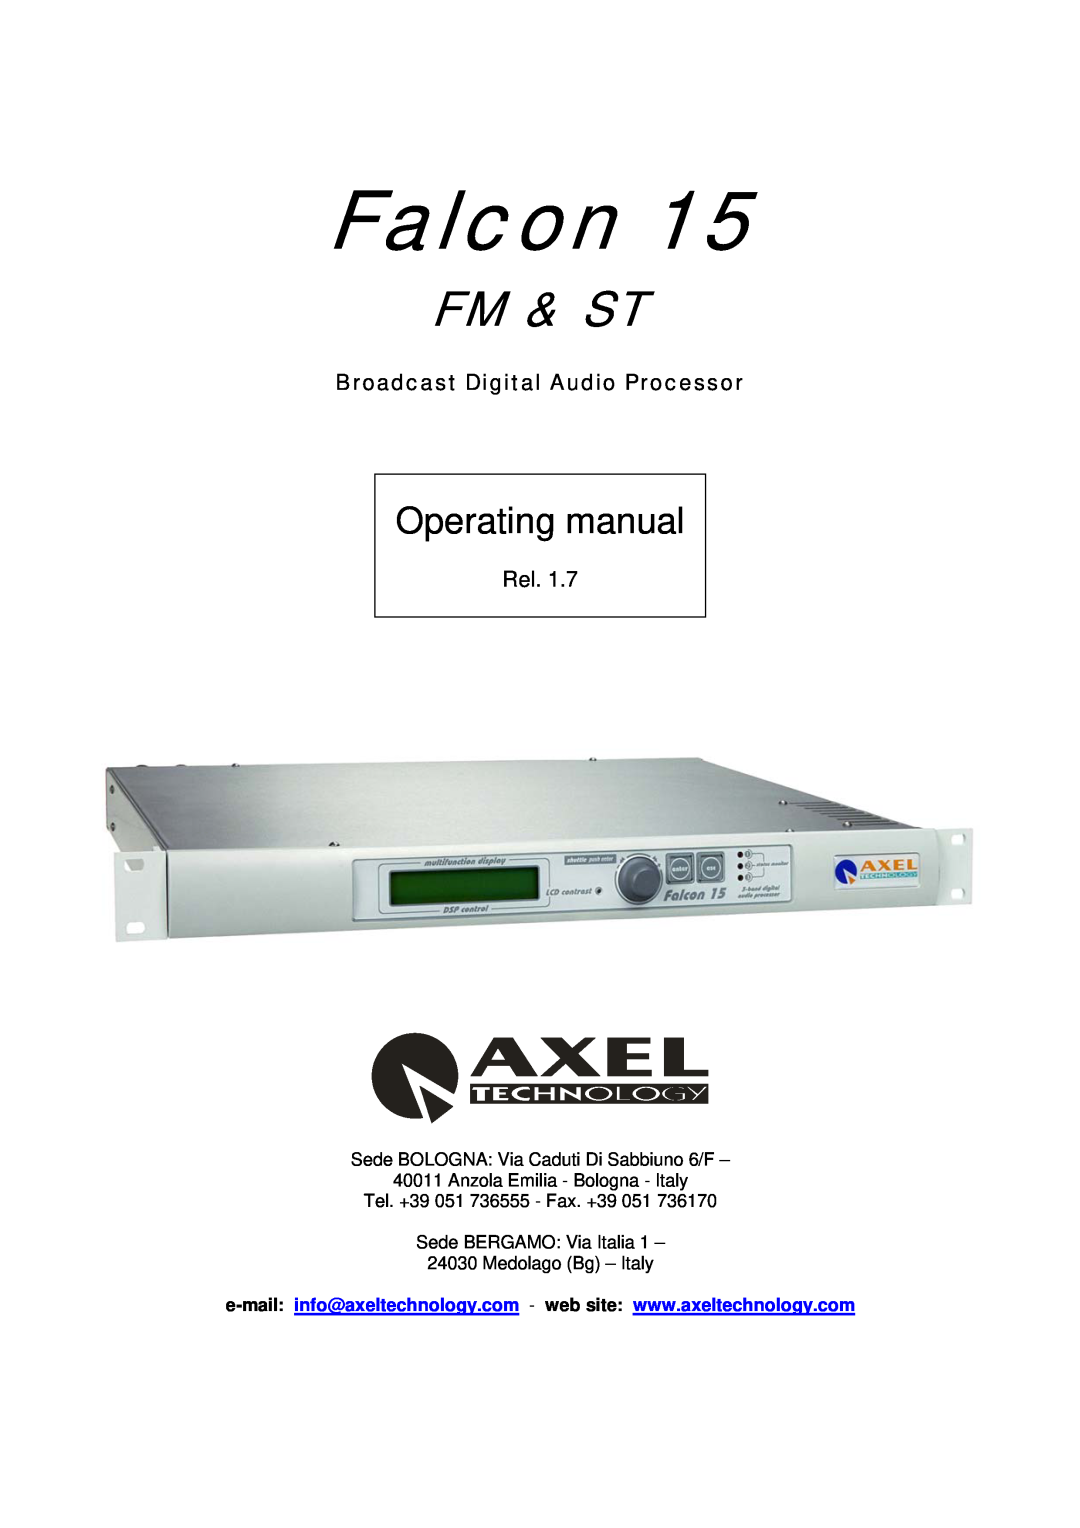 Falcon 15 manual Falcon, Fm & St, Operating manual, Broadcast Digital Audio Processor, Rel 